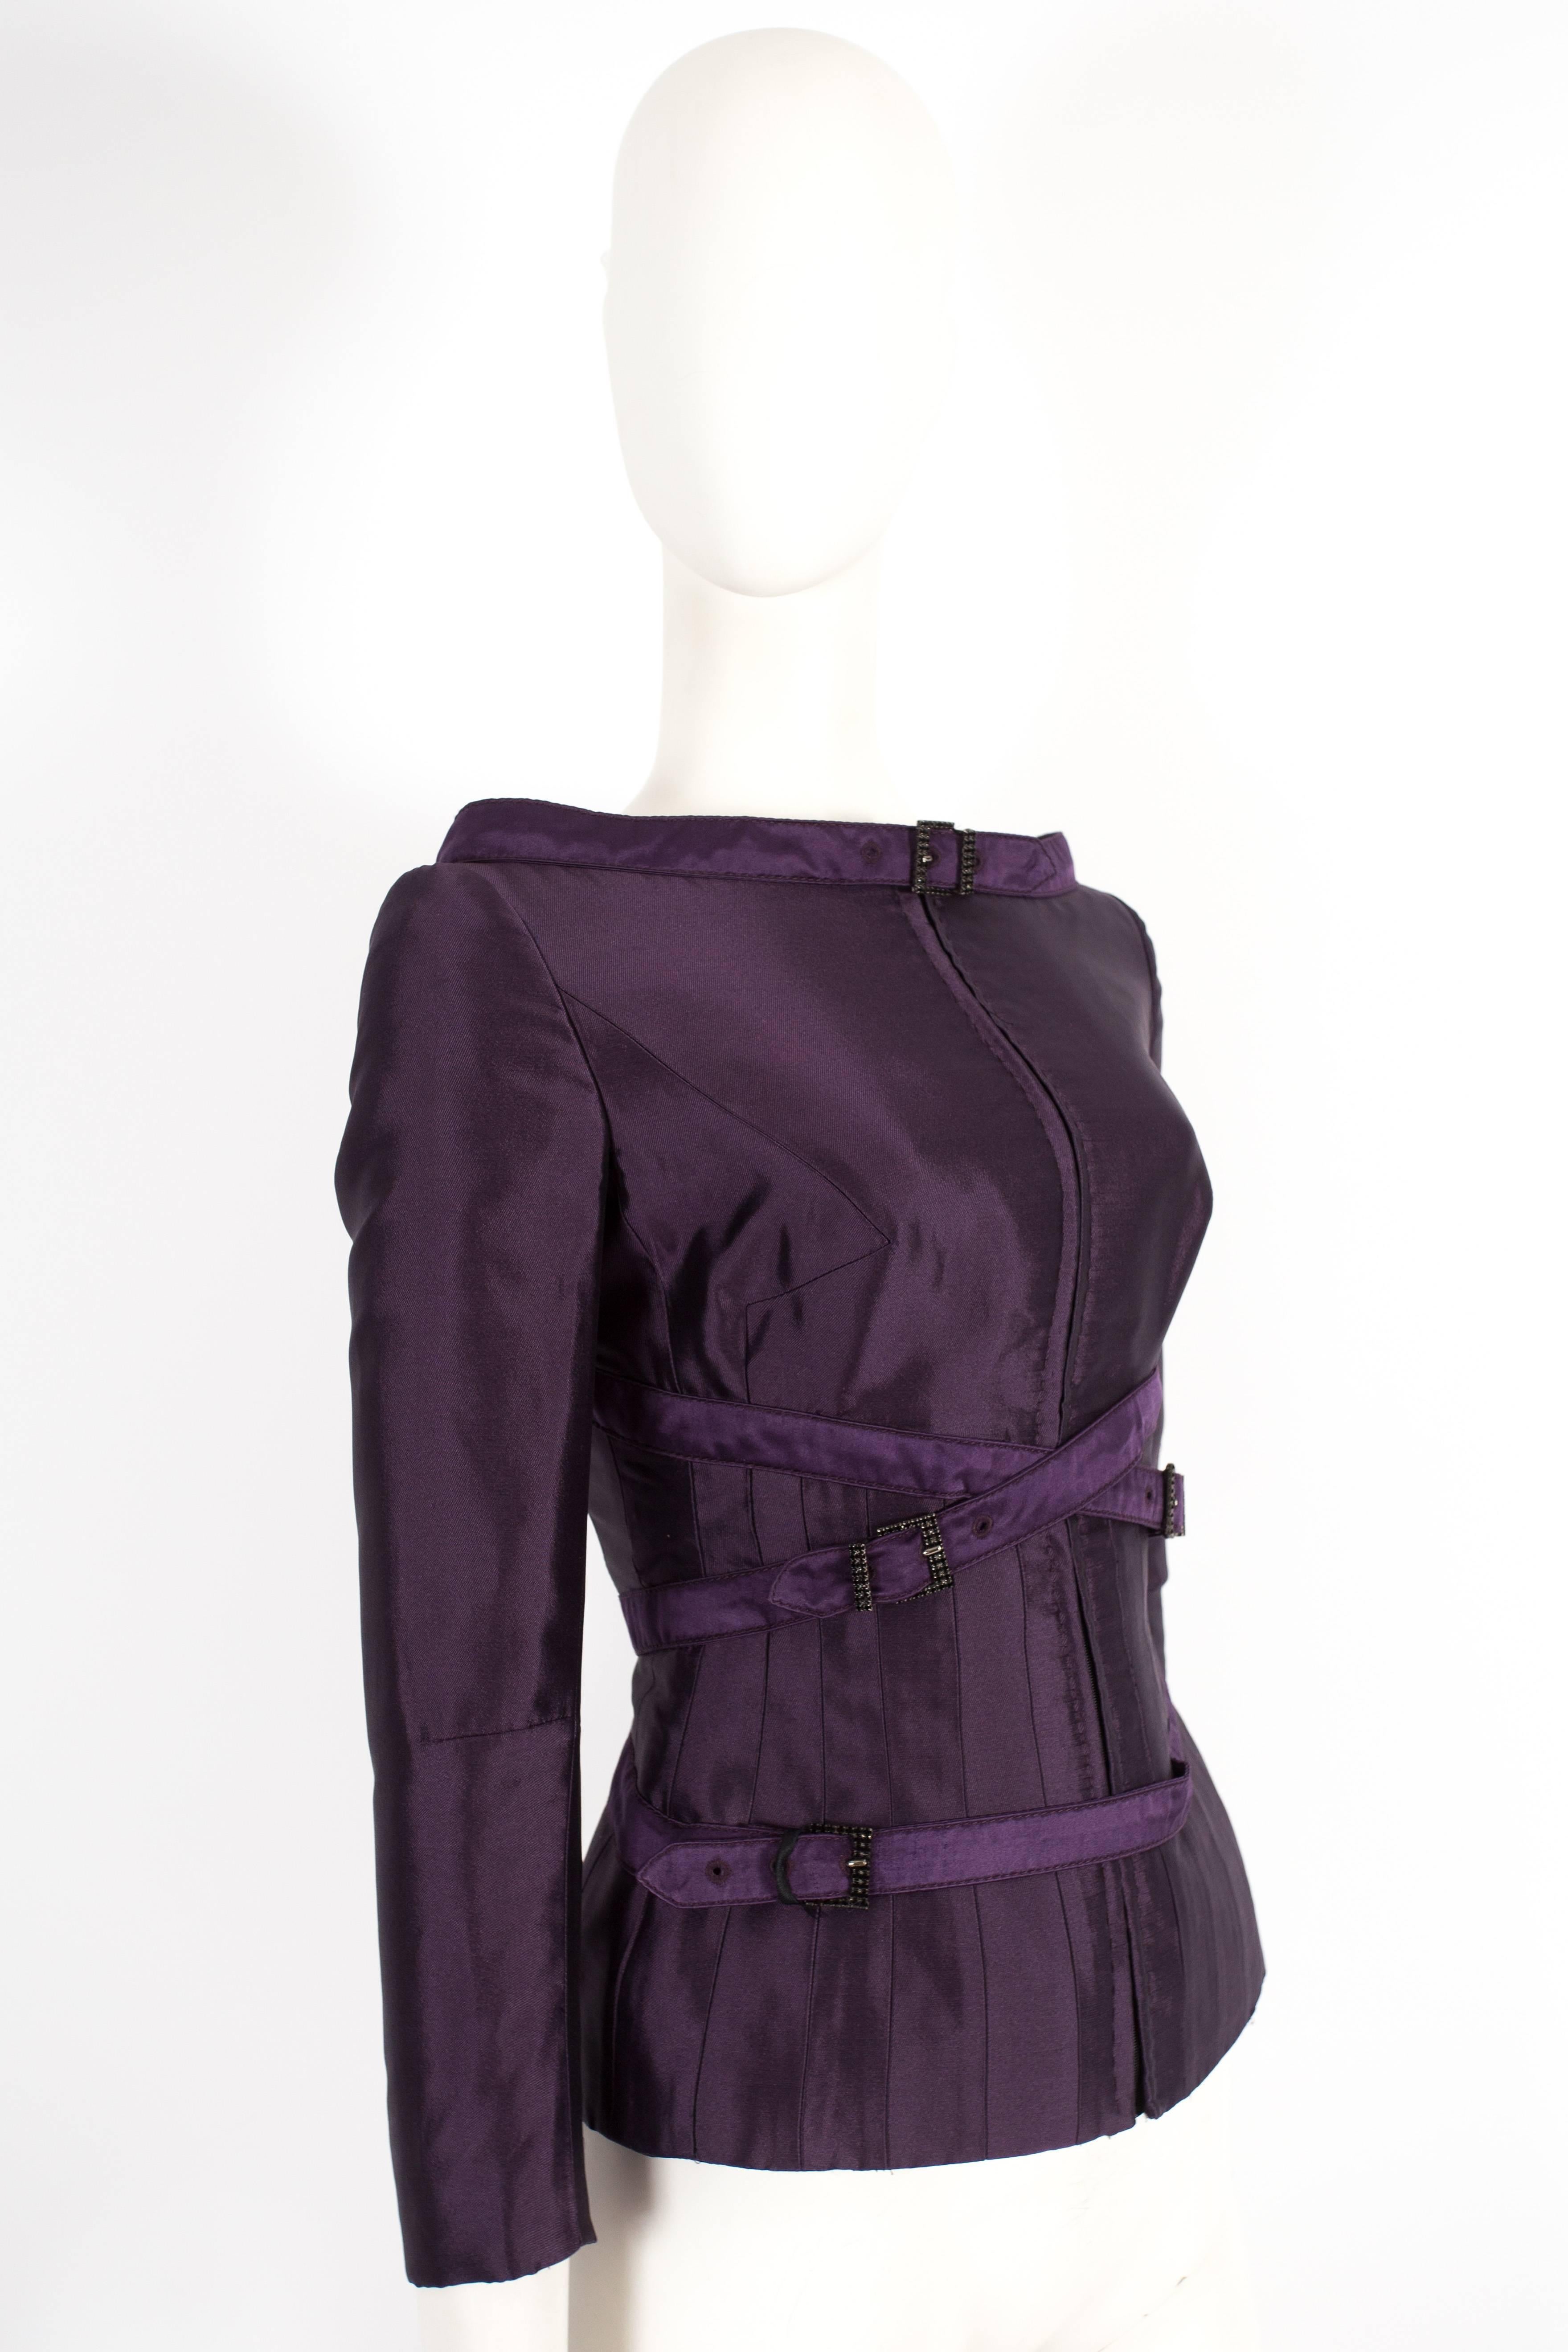 Alexander McQueen purple silk taffeta evening jacket, fw 2007 In Excellent Condition For Sale In London, GB